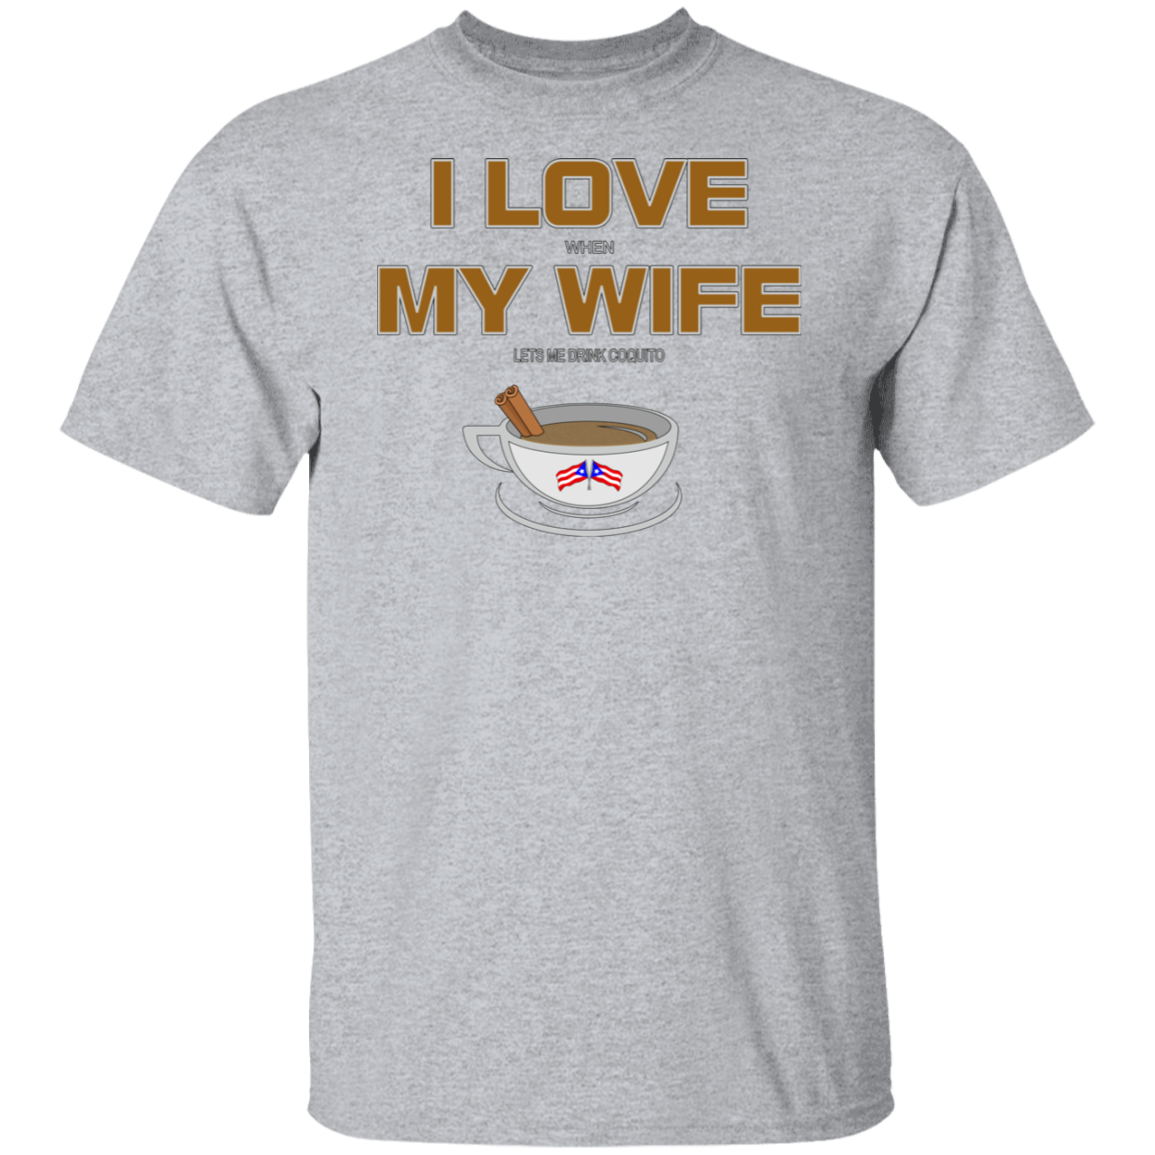 I Love My Wife - T-Shirt